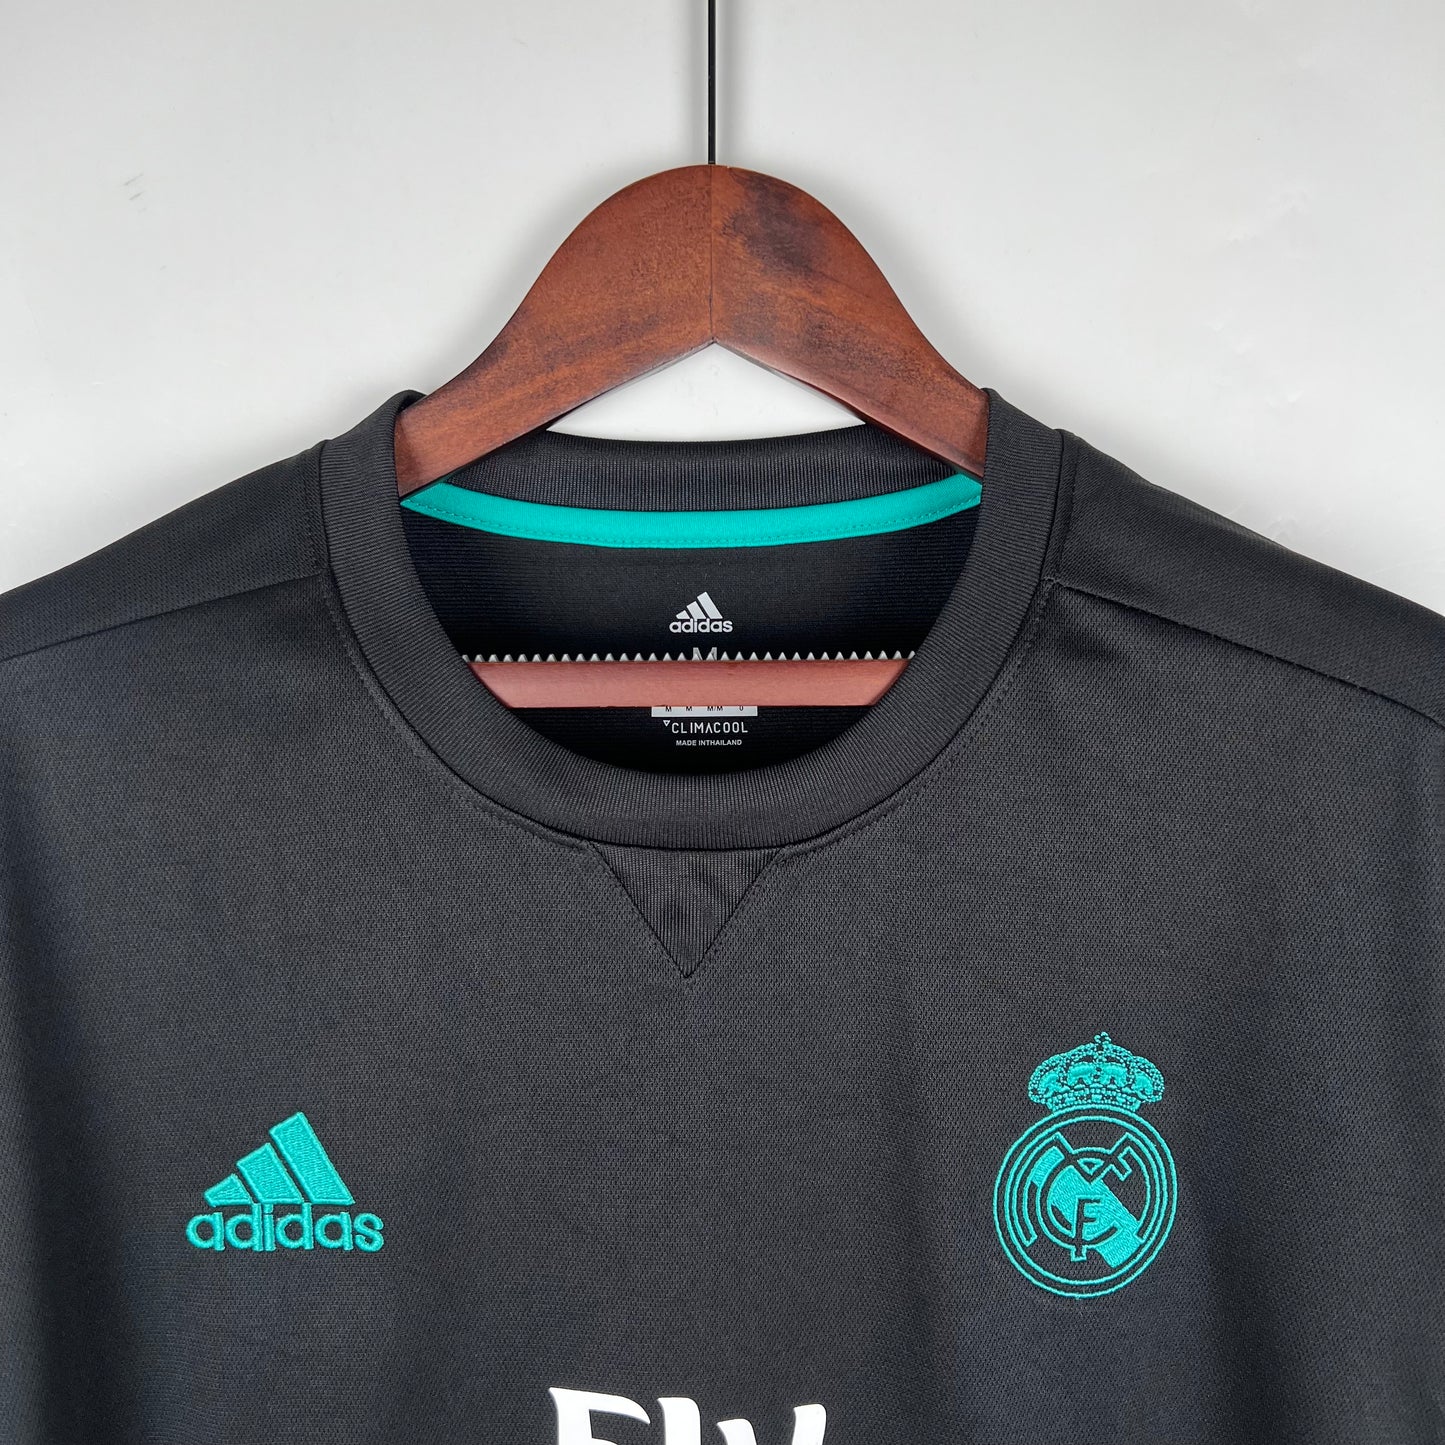 Retro Real Madrid 17/18 Away Kit